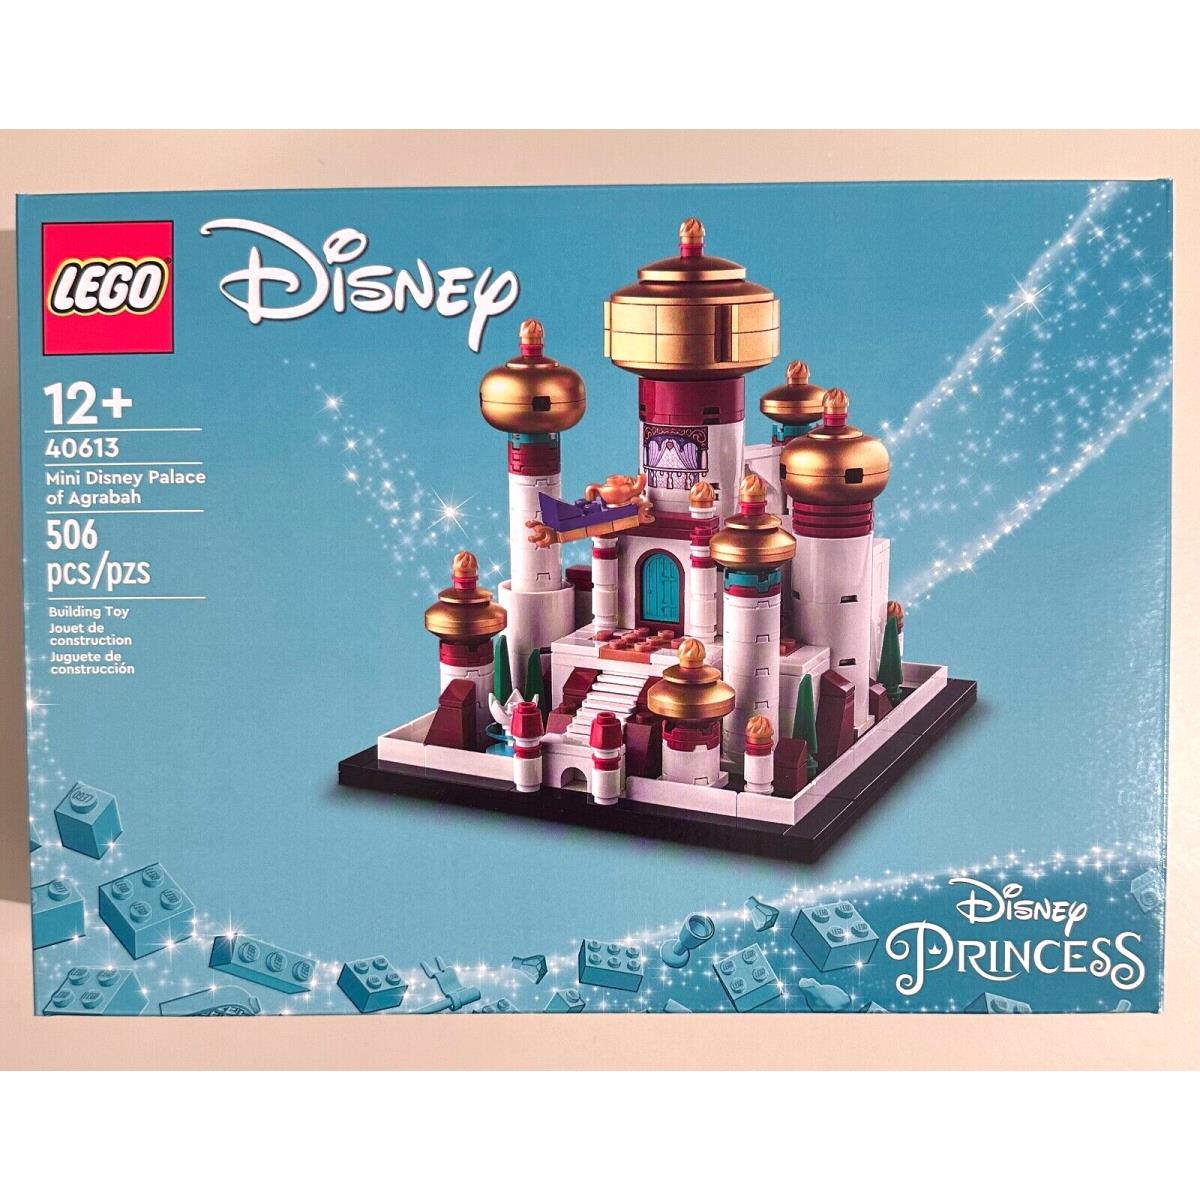 Lego Disney 40613 Mini Disney Palace of Agrabah 506 Pcs Building Kit Toy Set